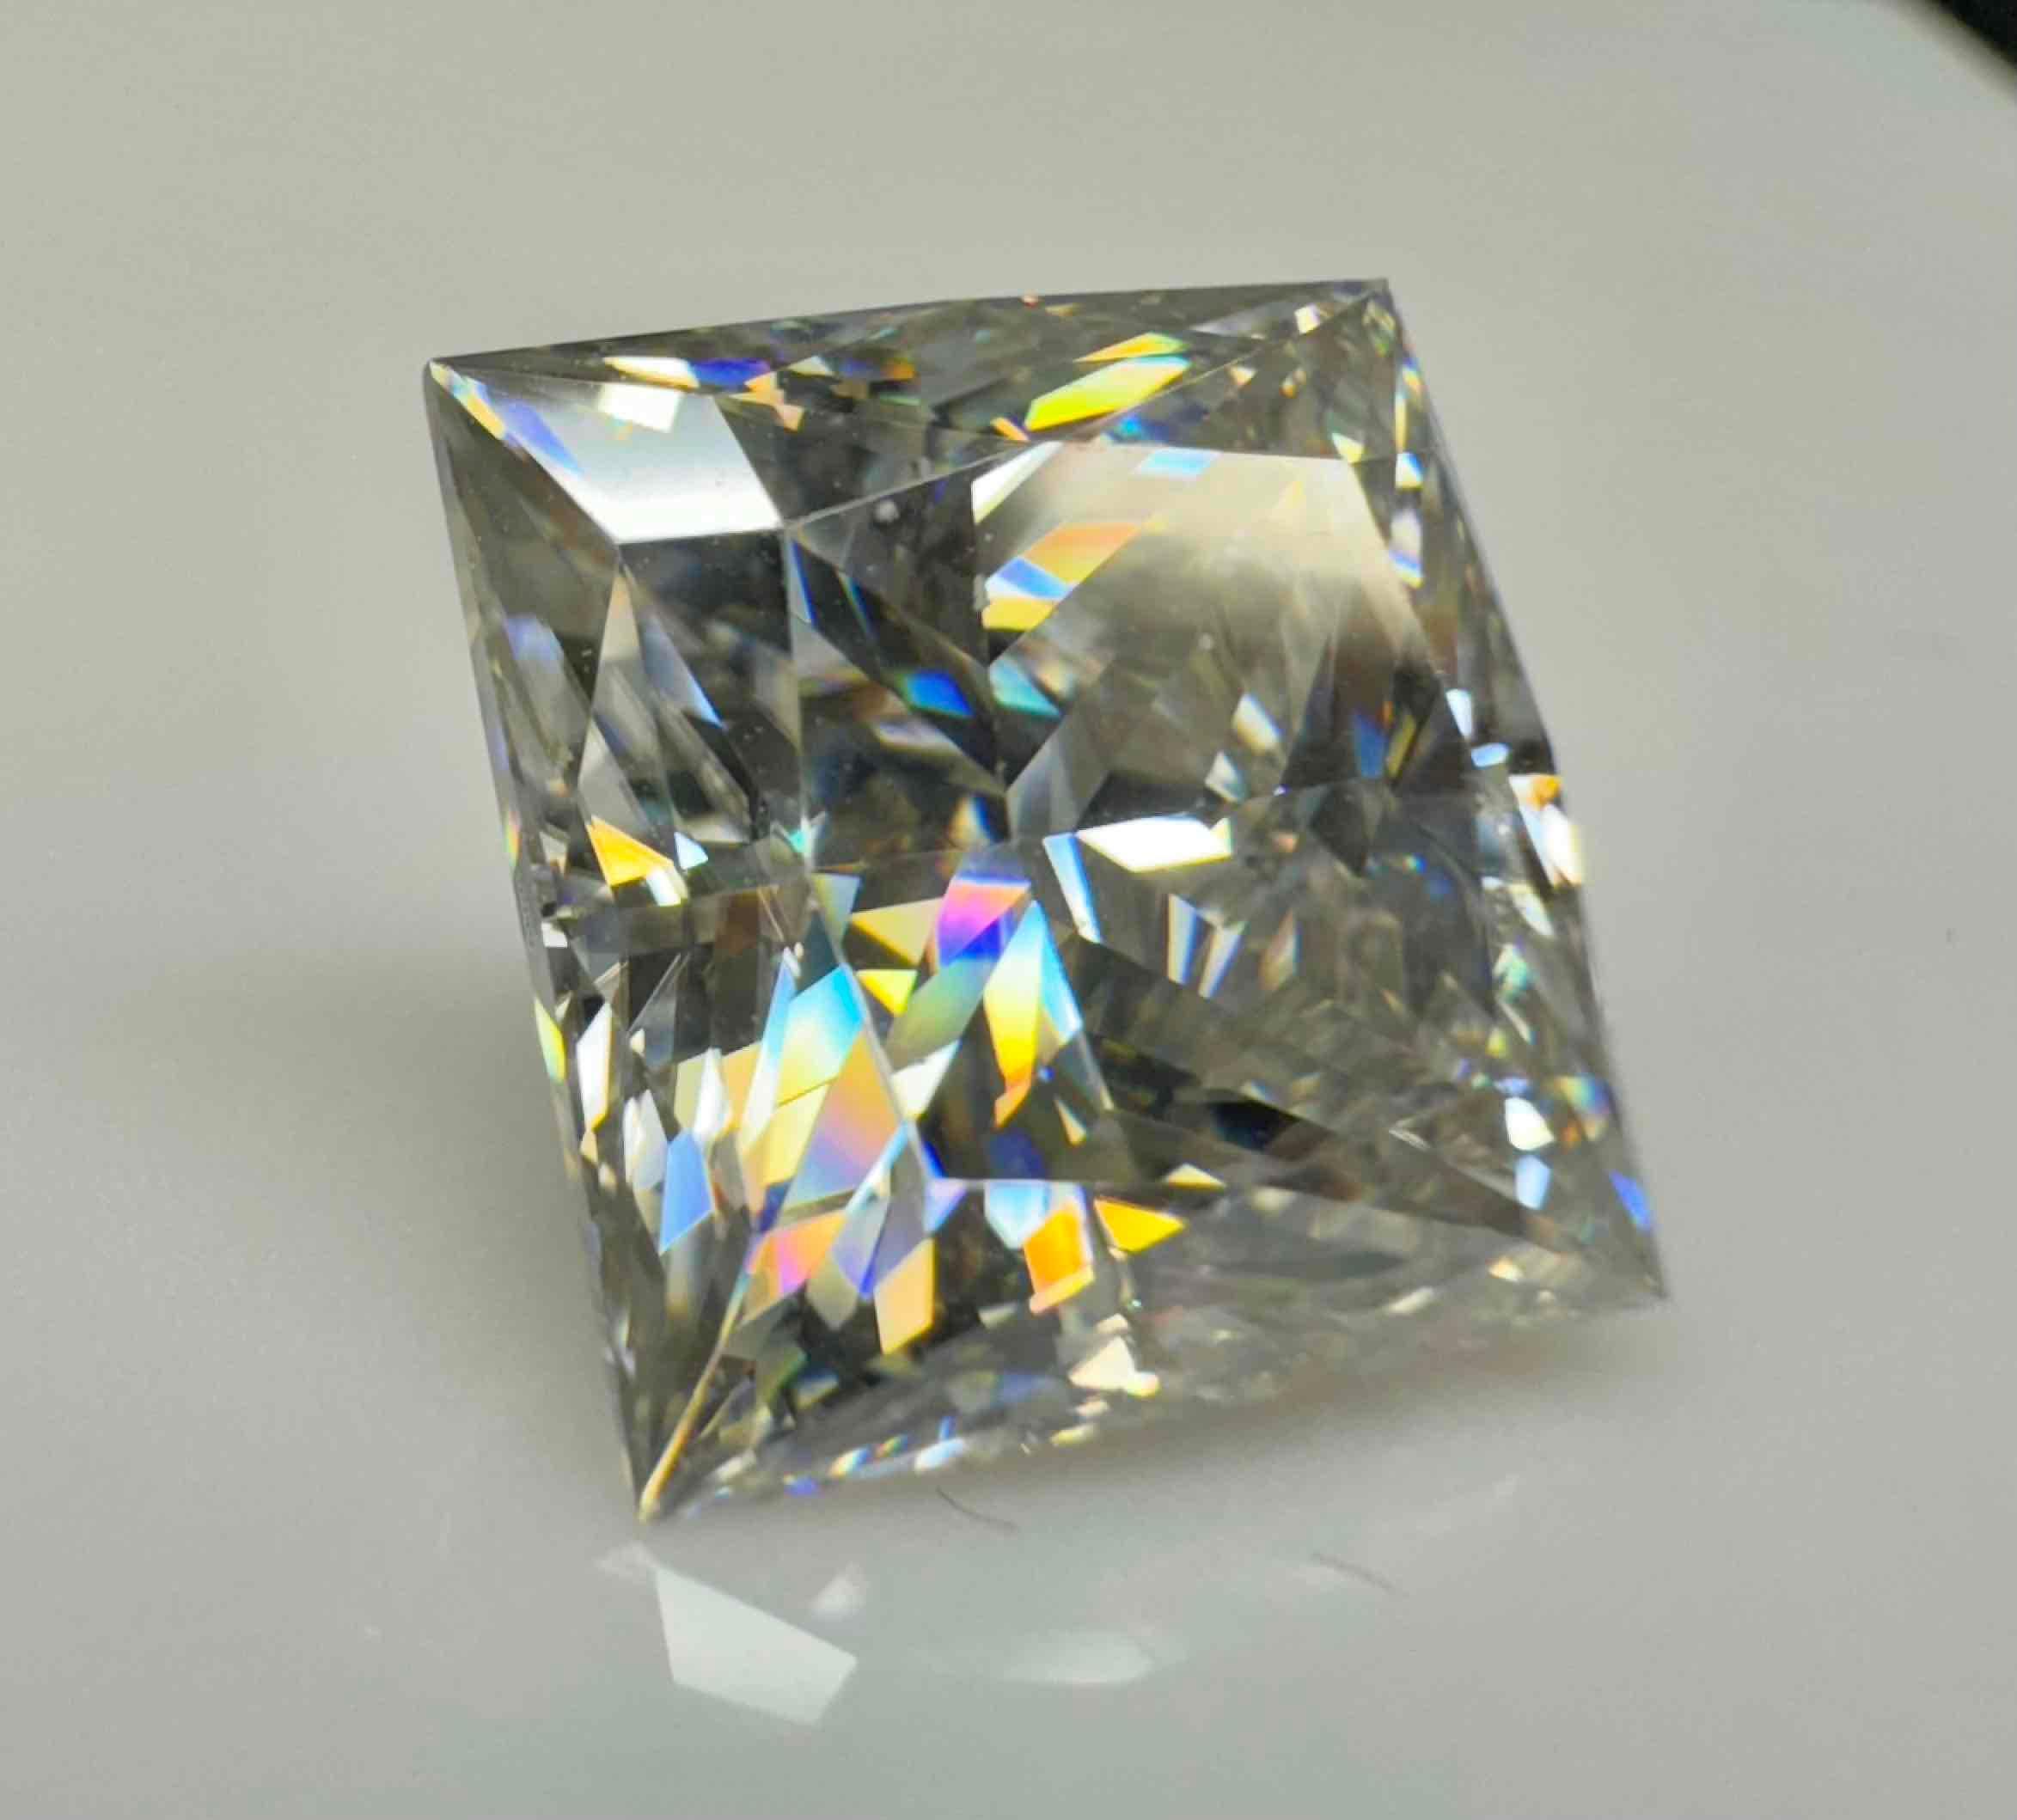 10.8ct Princess Cut Moissanite Diamond Gemstone with GRA Certificate